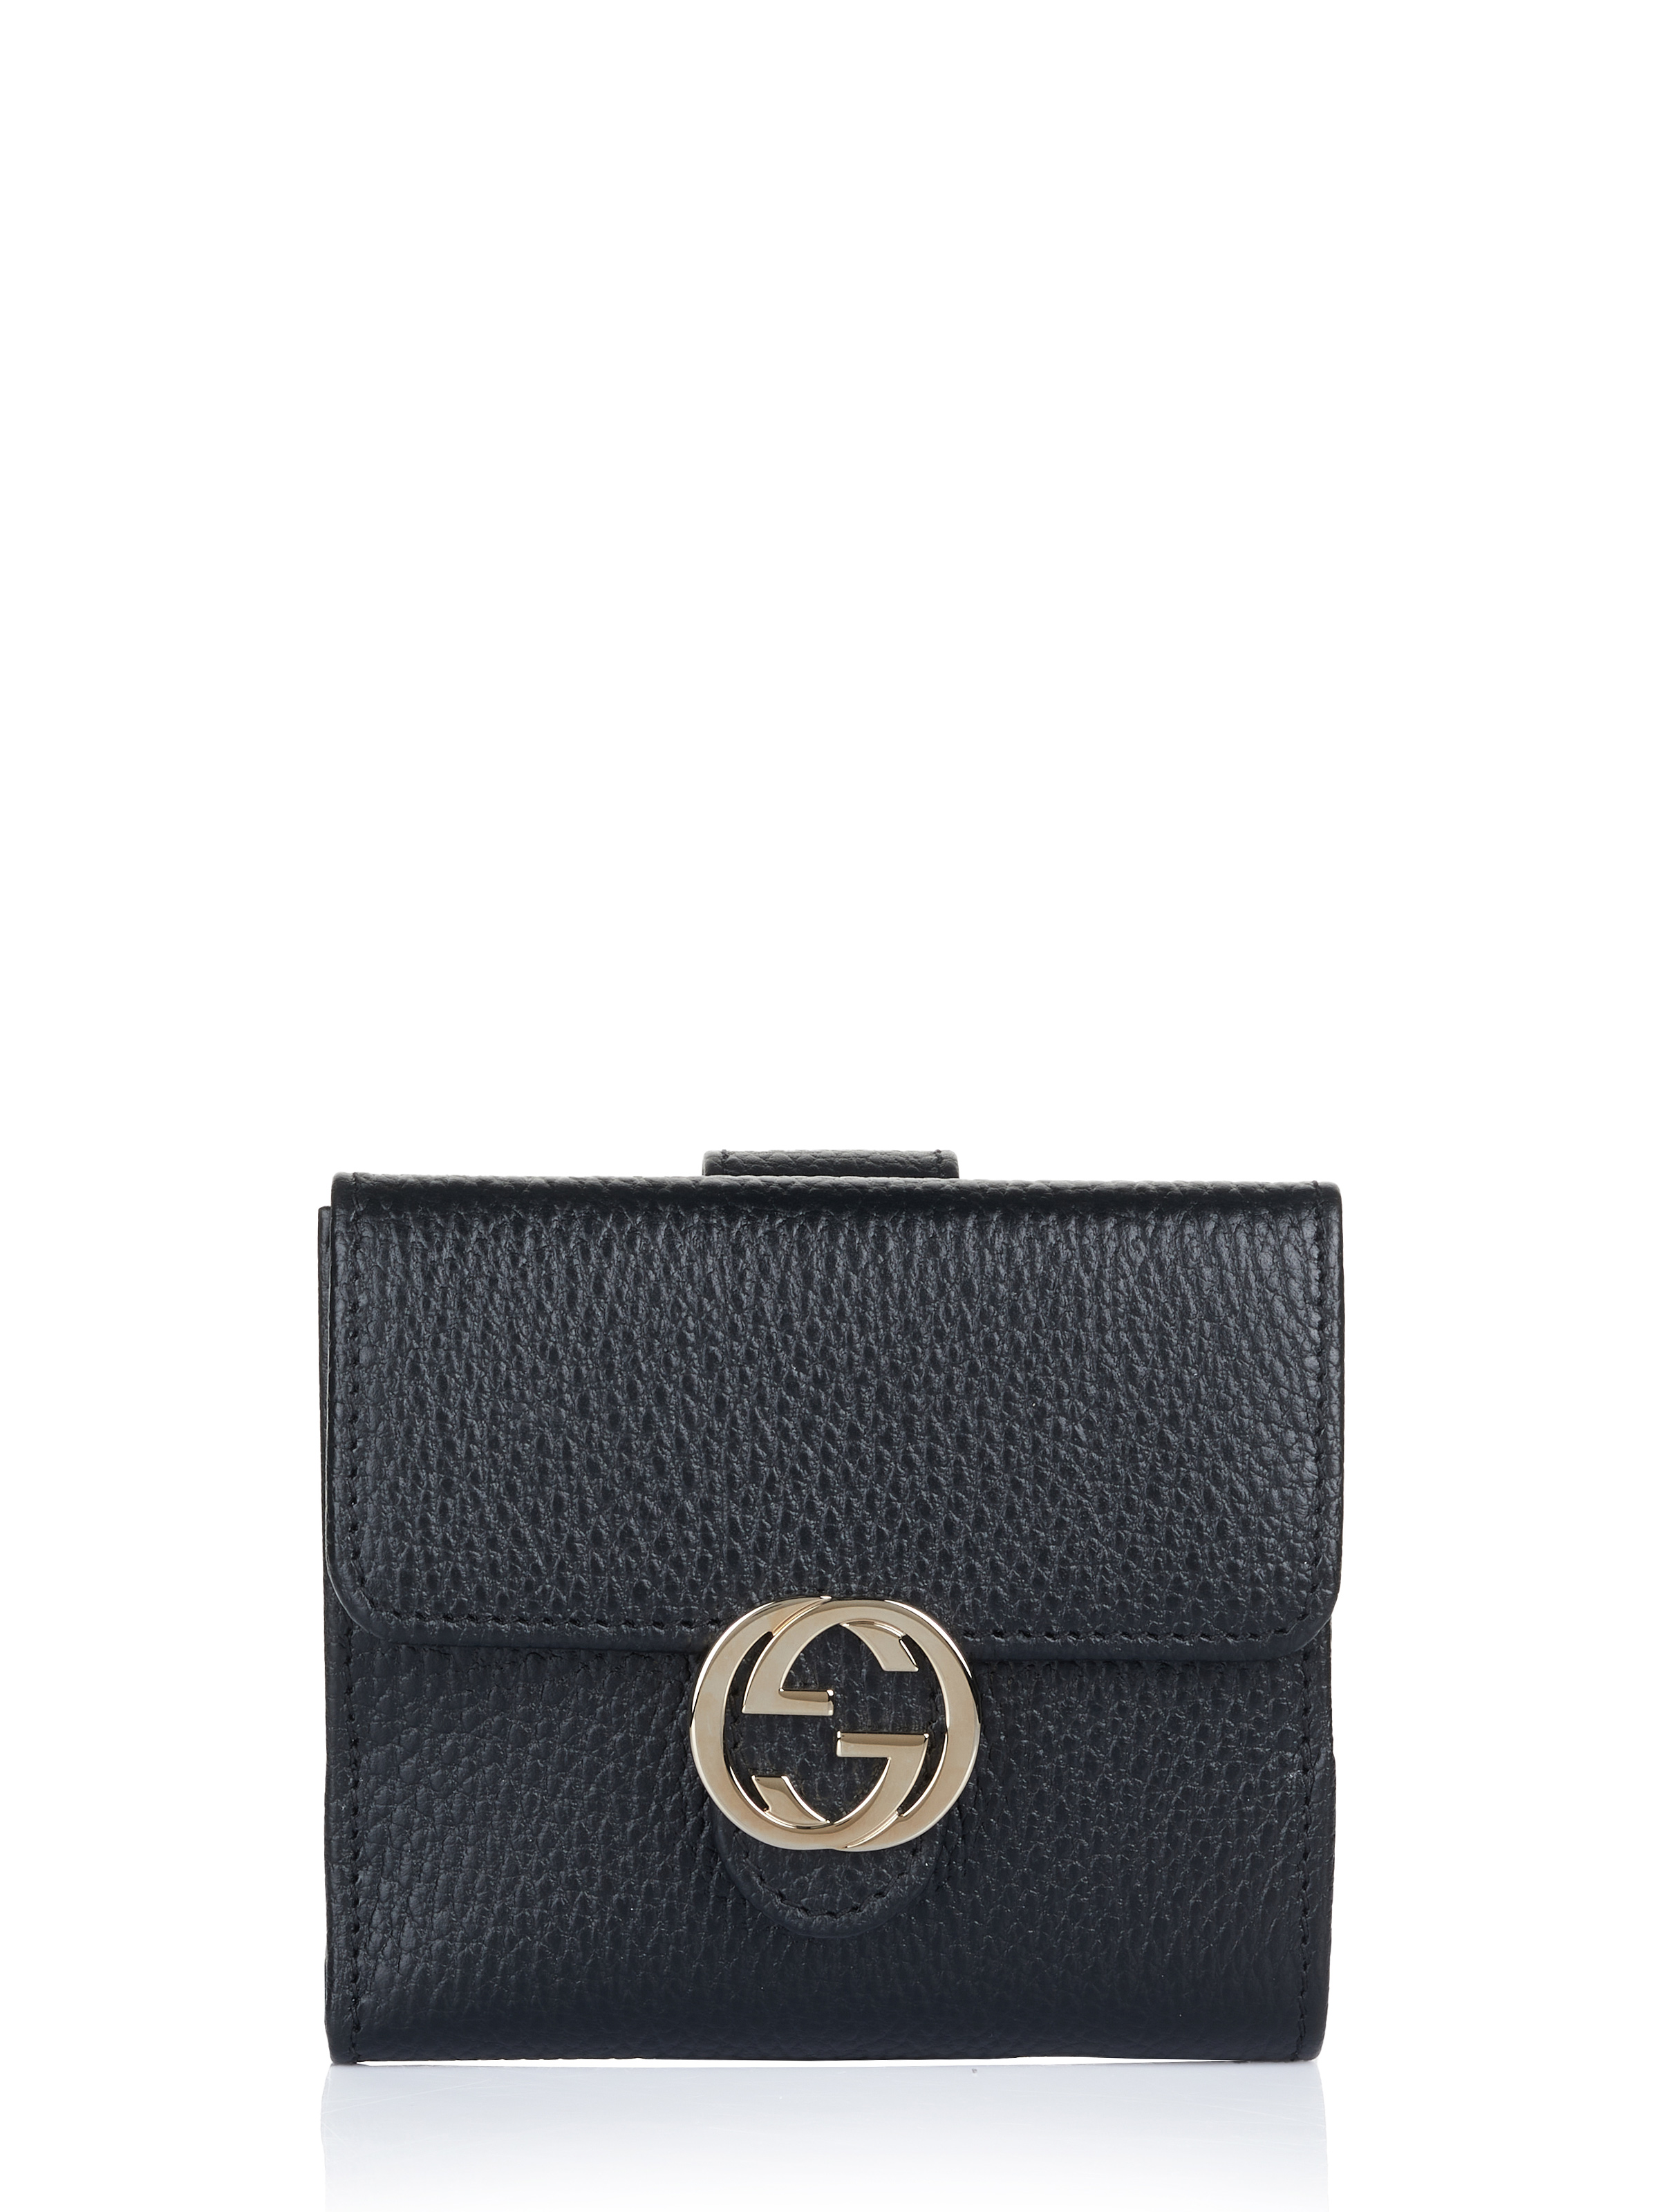 Gucci Wallet on SALE | Fashionesta